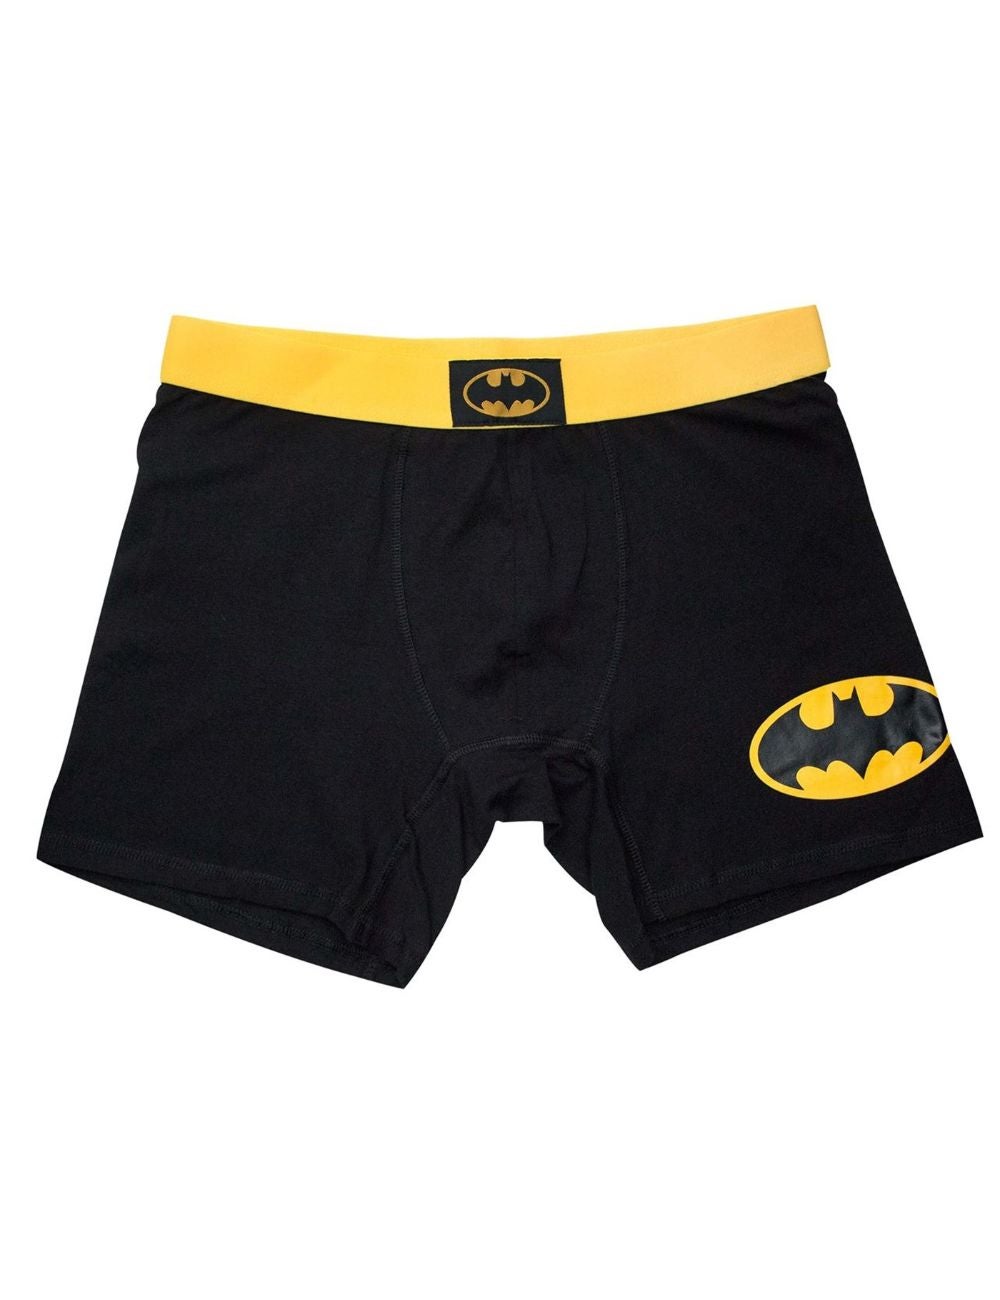 Batman Classic Men's Underwear Boxer Briefs | Rivers Australia